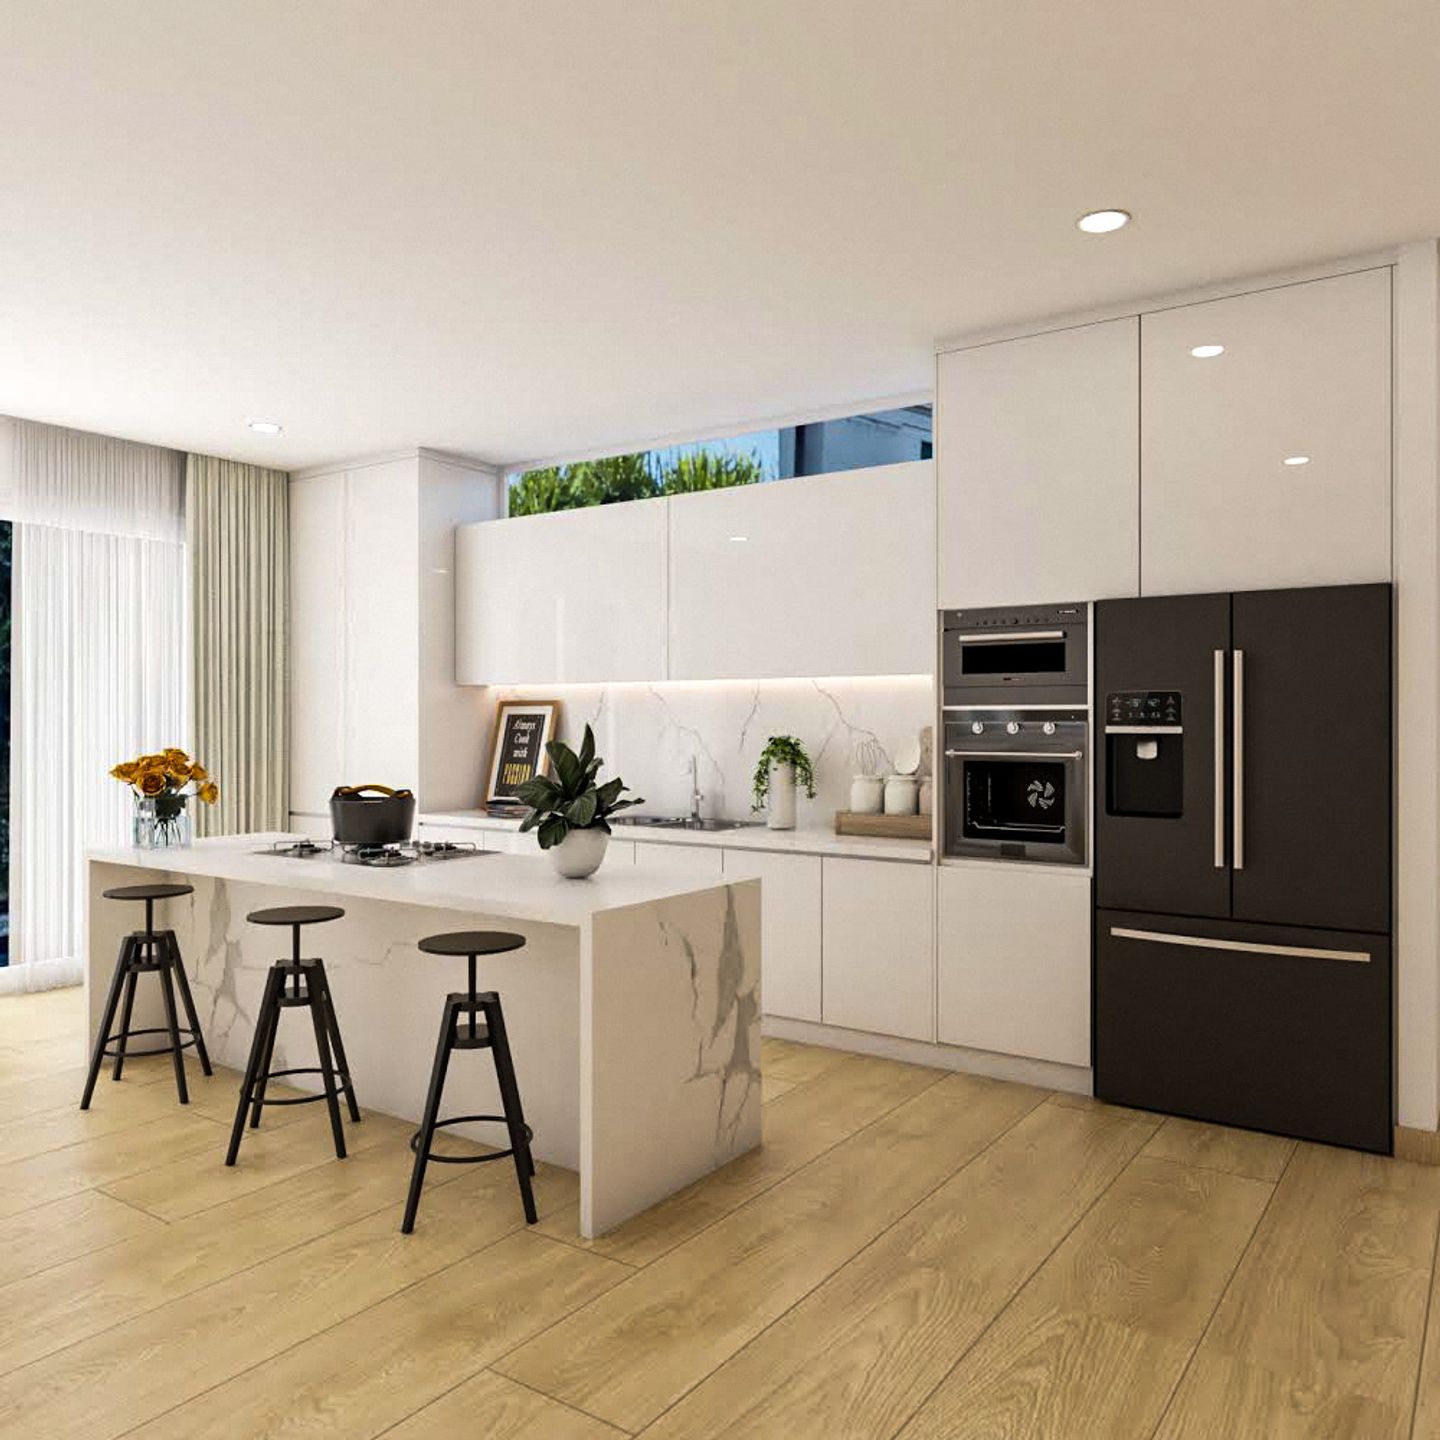 White Island Kitchen Design With Quartz Countertop - Livspace